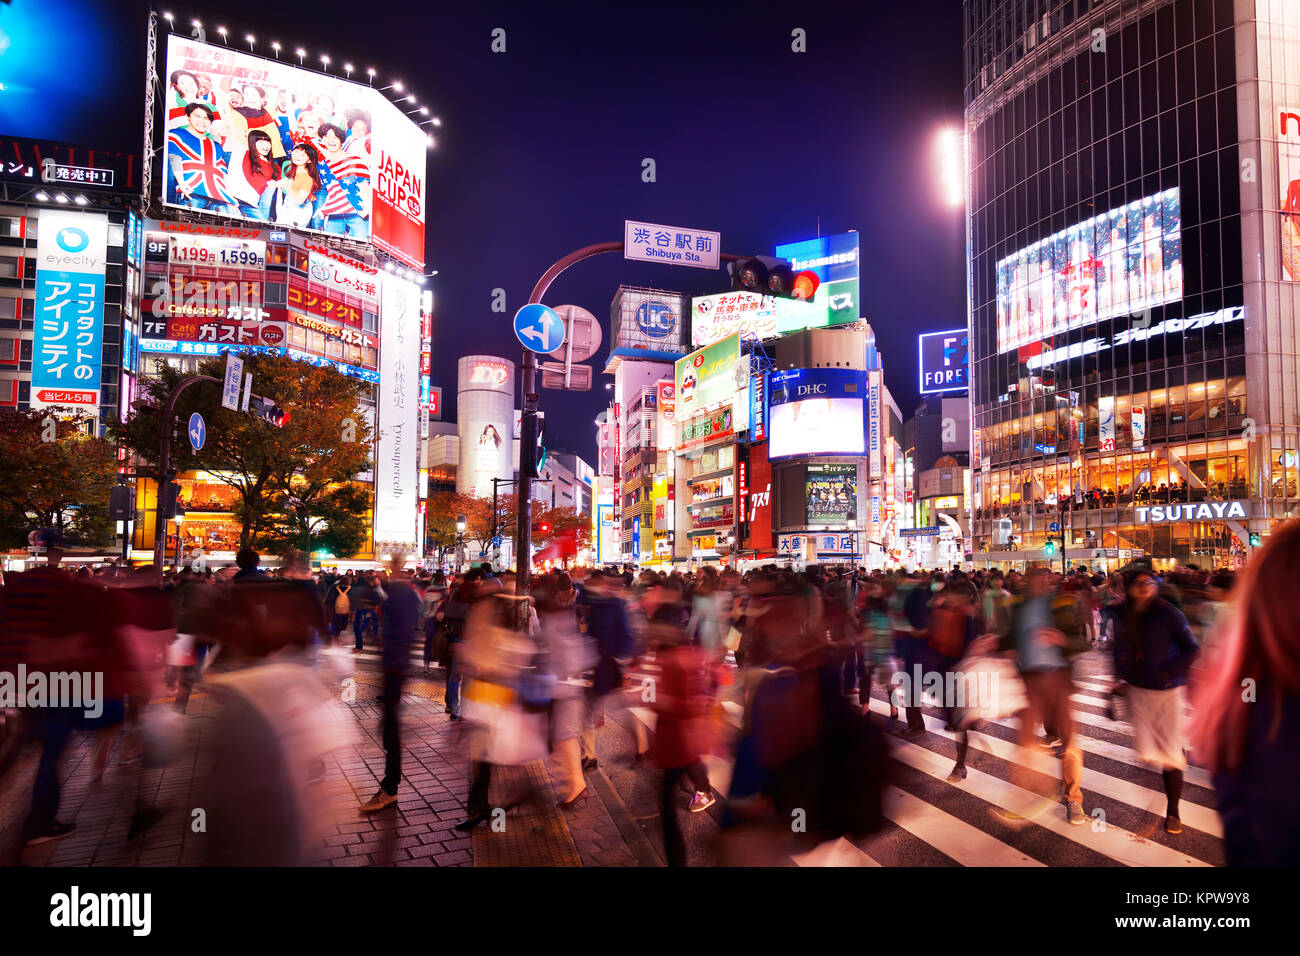 Lizenz und Drucke bei MaximImages.com - Shibuya Crossing, Tokio, Japan Reise Stock Foto Stockfoto